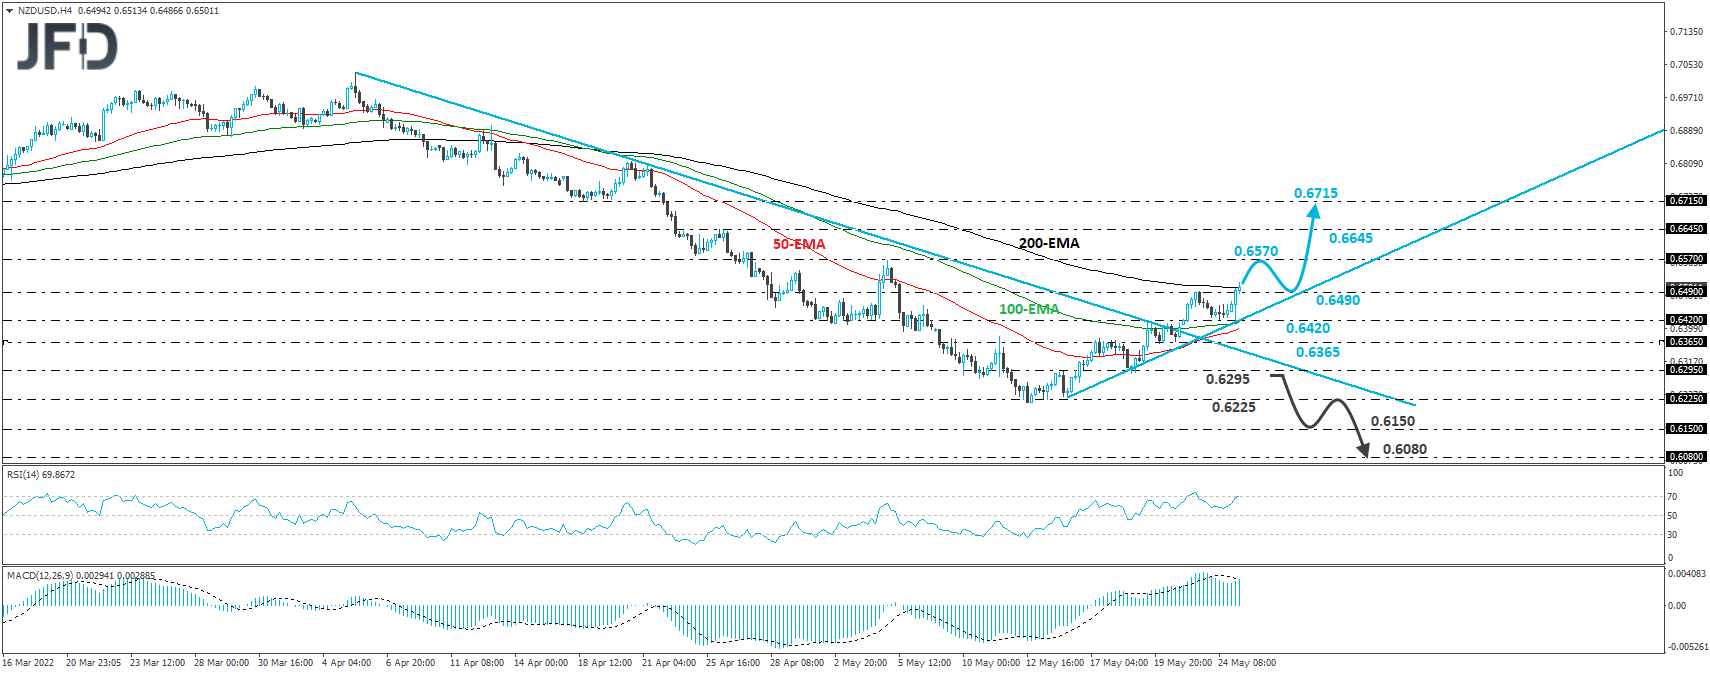 NZD/USD 4-hour chart technical analysis.